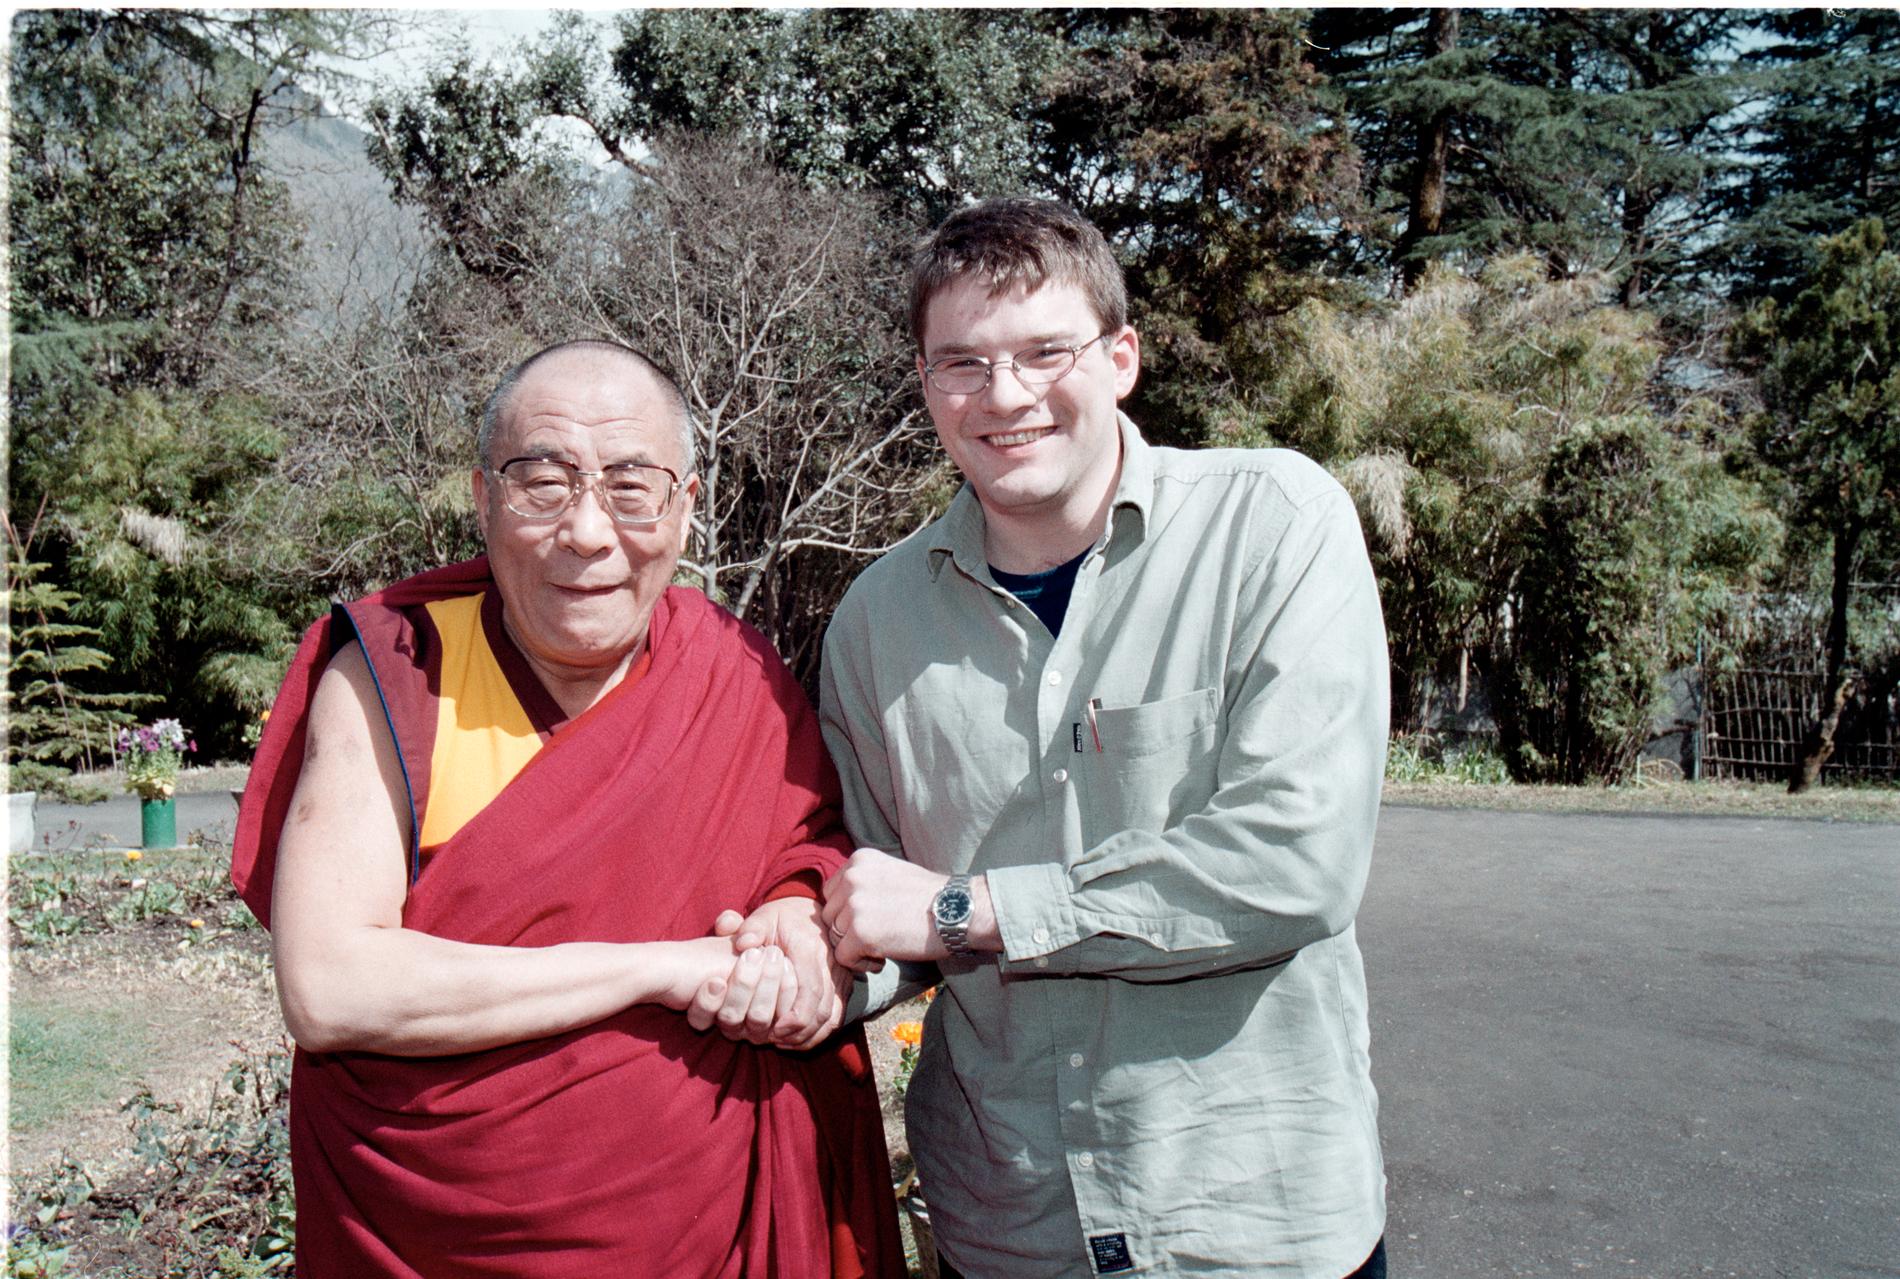 Intervju med Dalai Lama i april 2000.